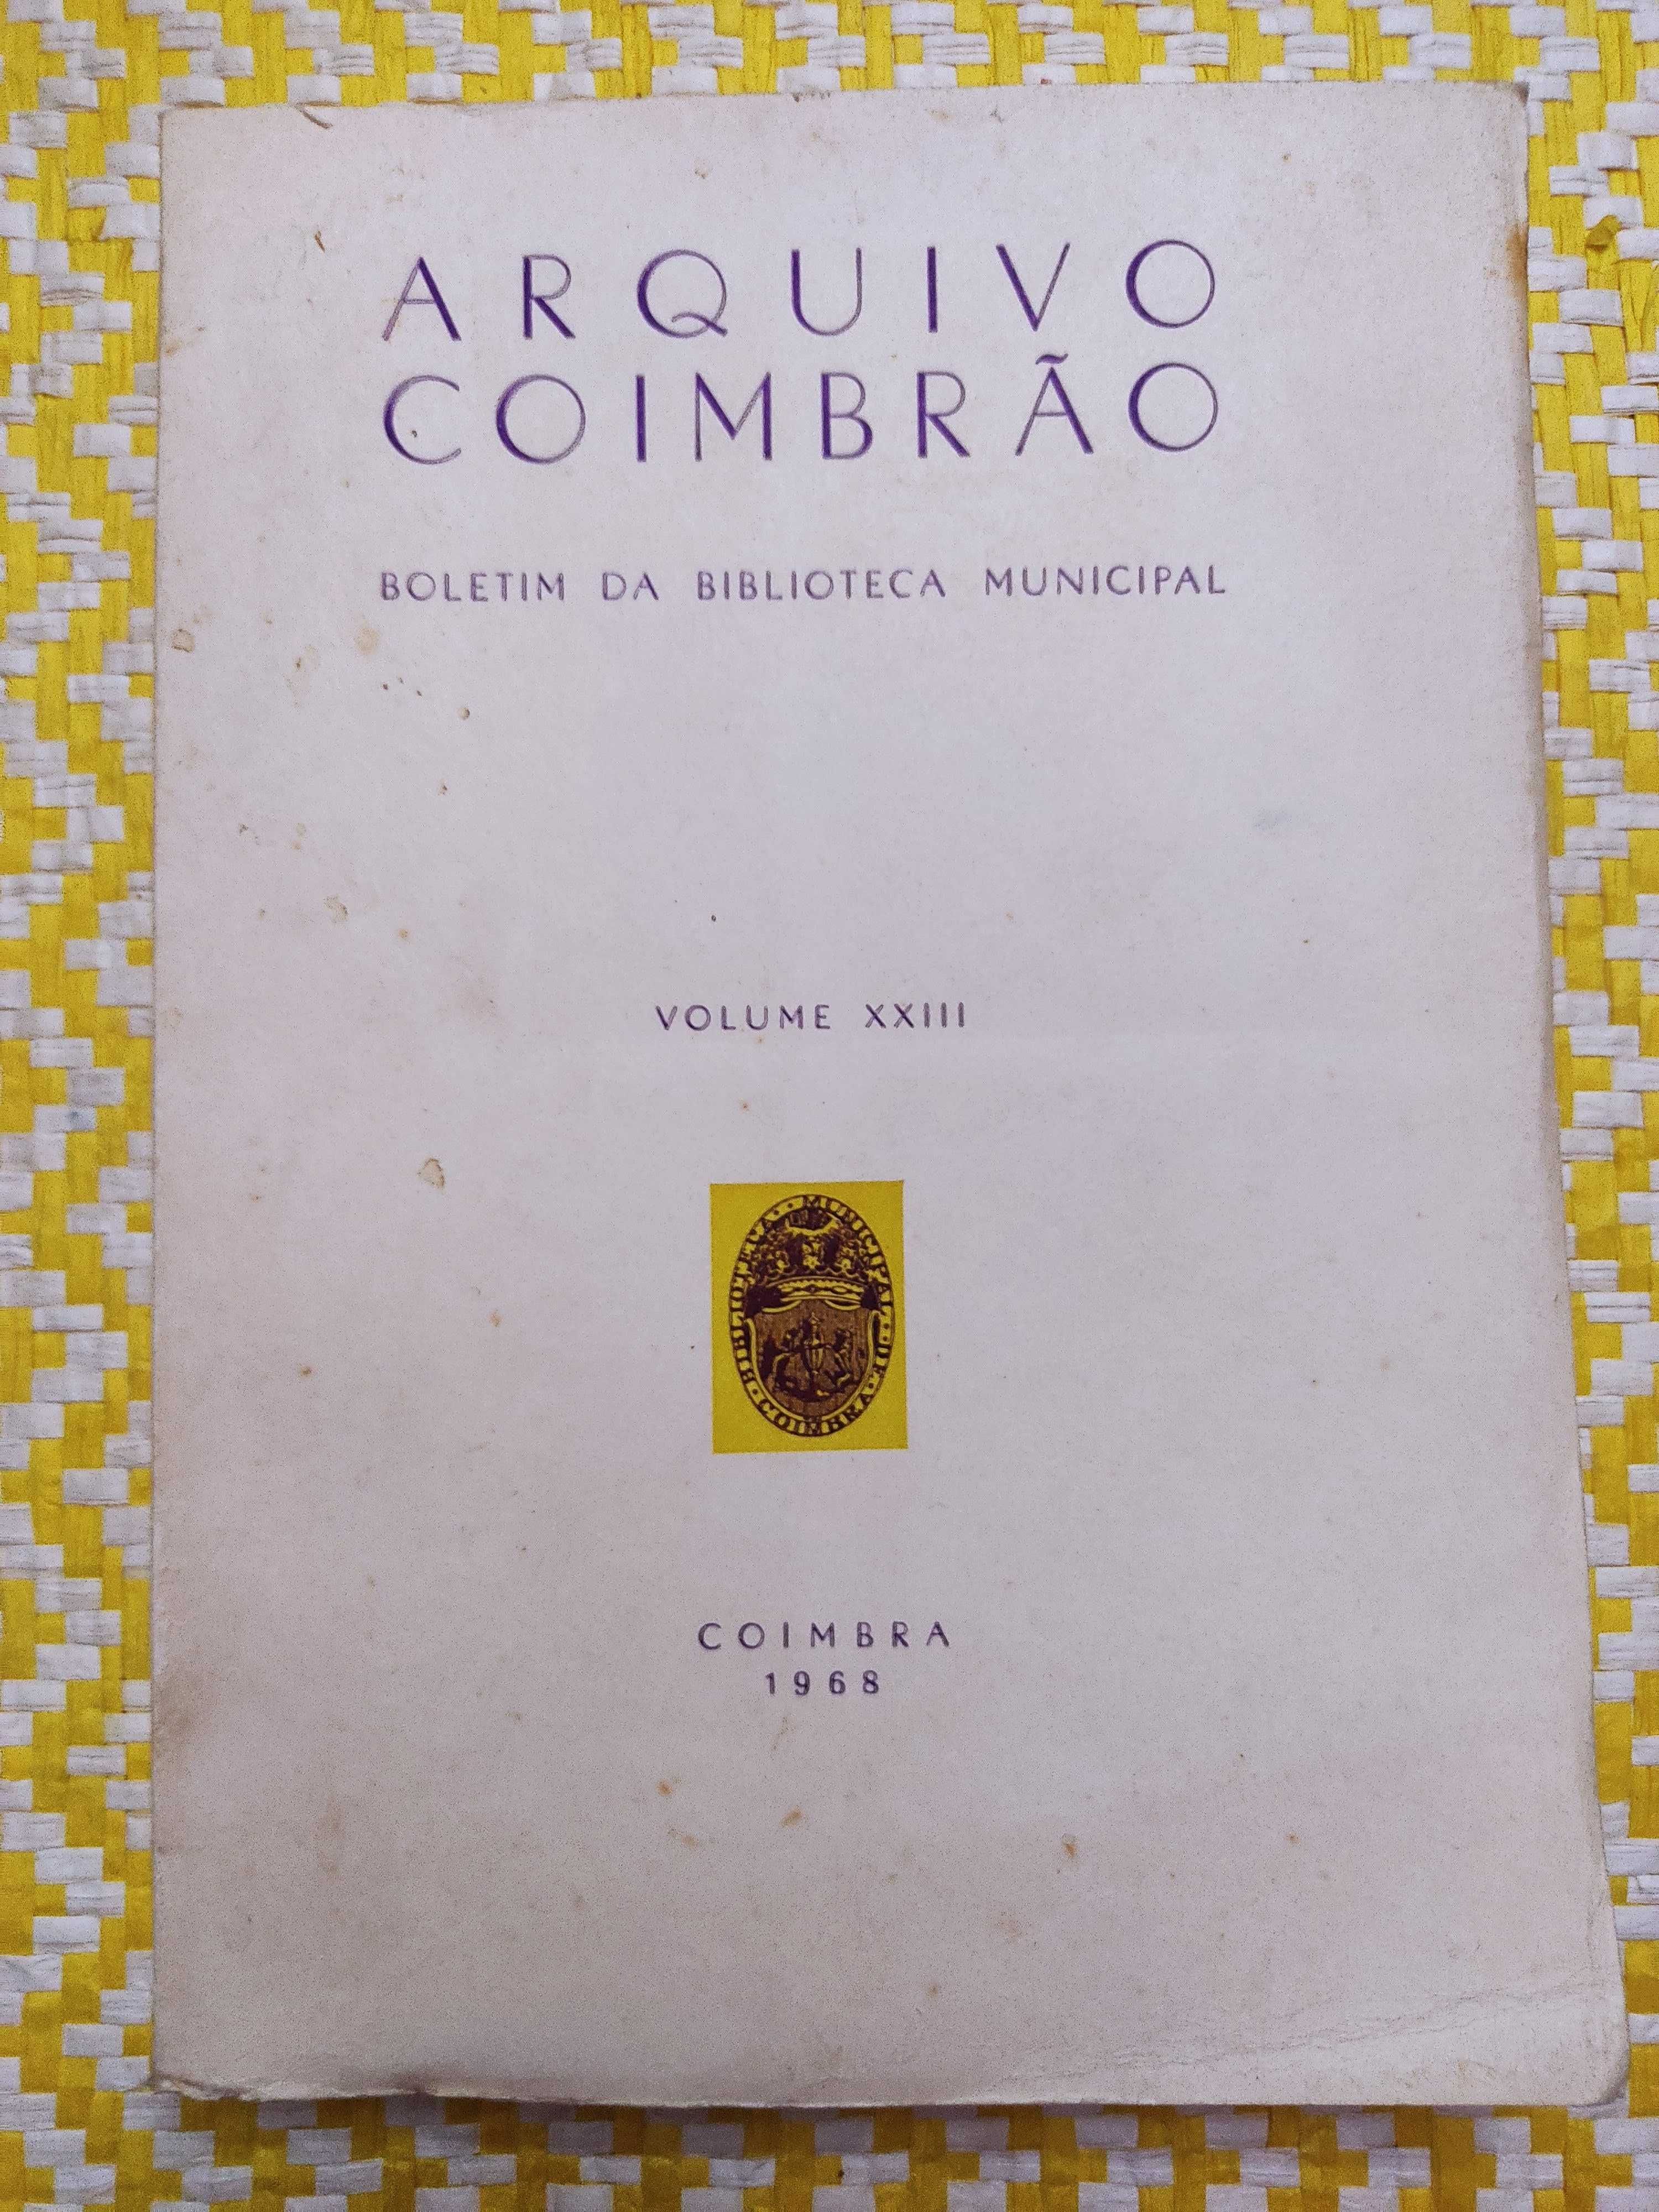 ARQUIVO COIMBRÃO  - Vol  XXIII 
Boletim Bibli Municipal
Coimbra - 1968